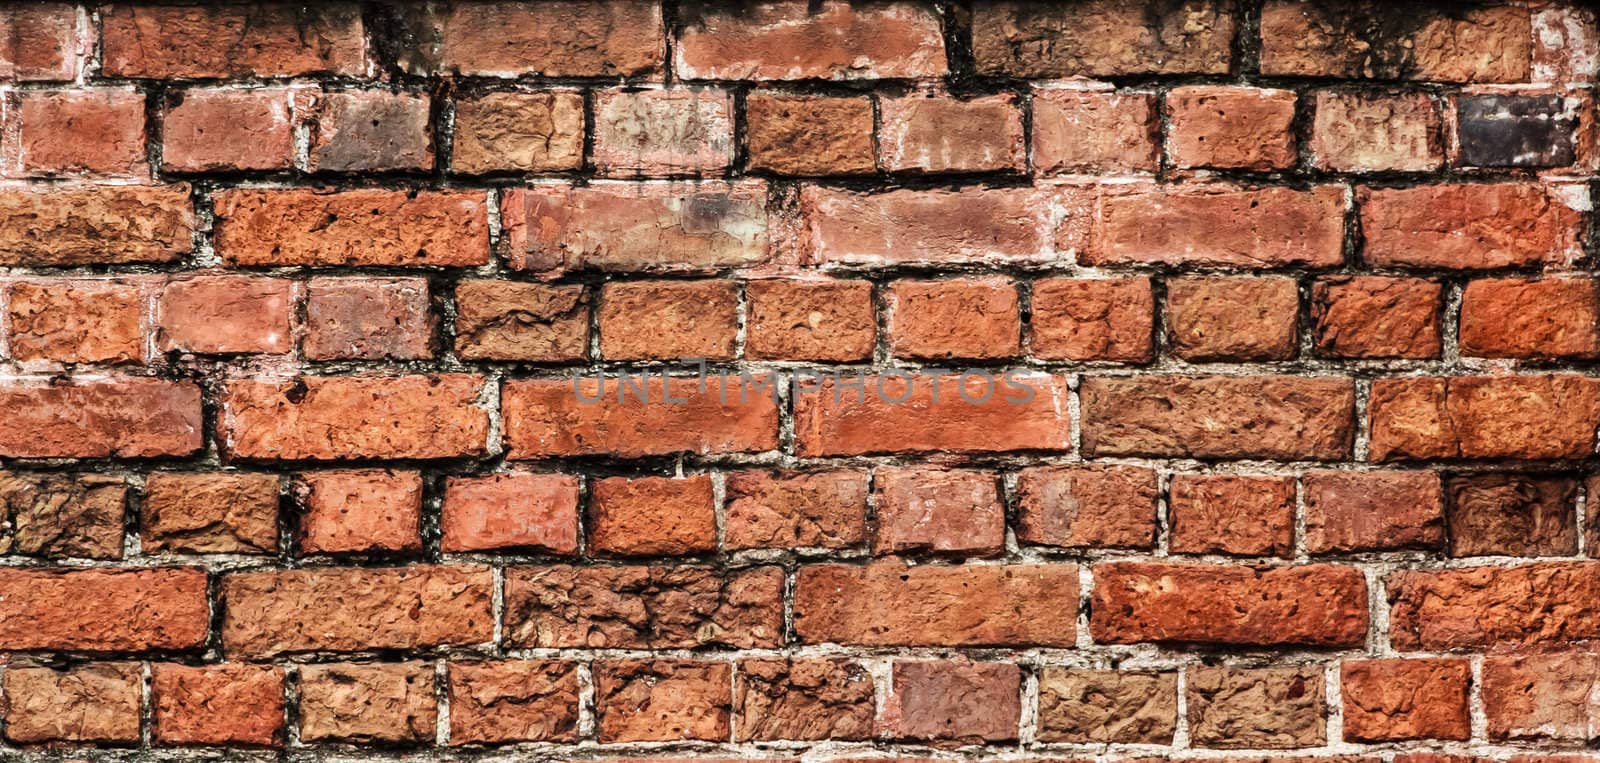 Weathered Old Brick Wall background, Closeup by punpleng